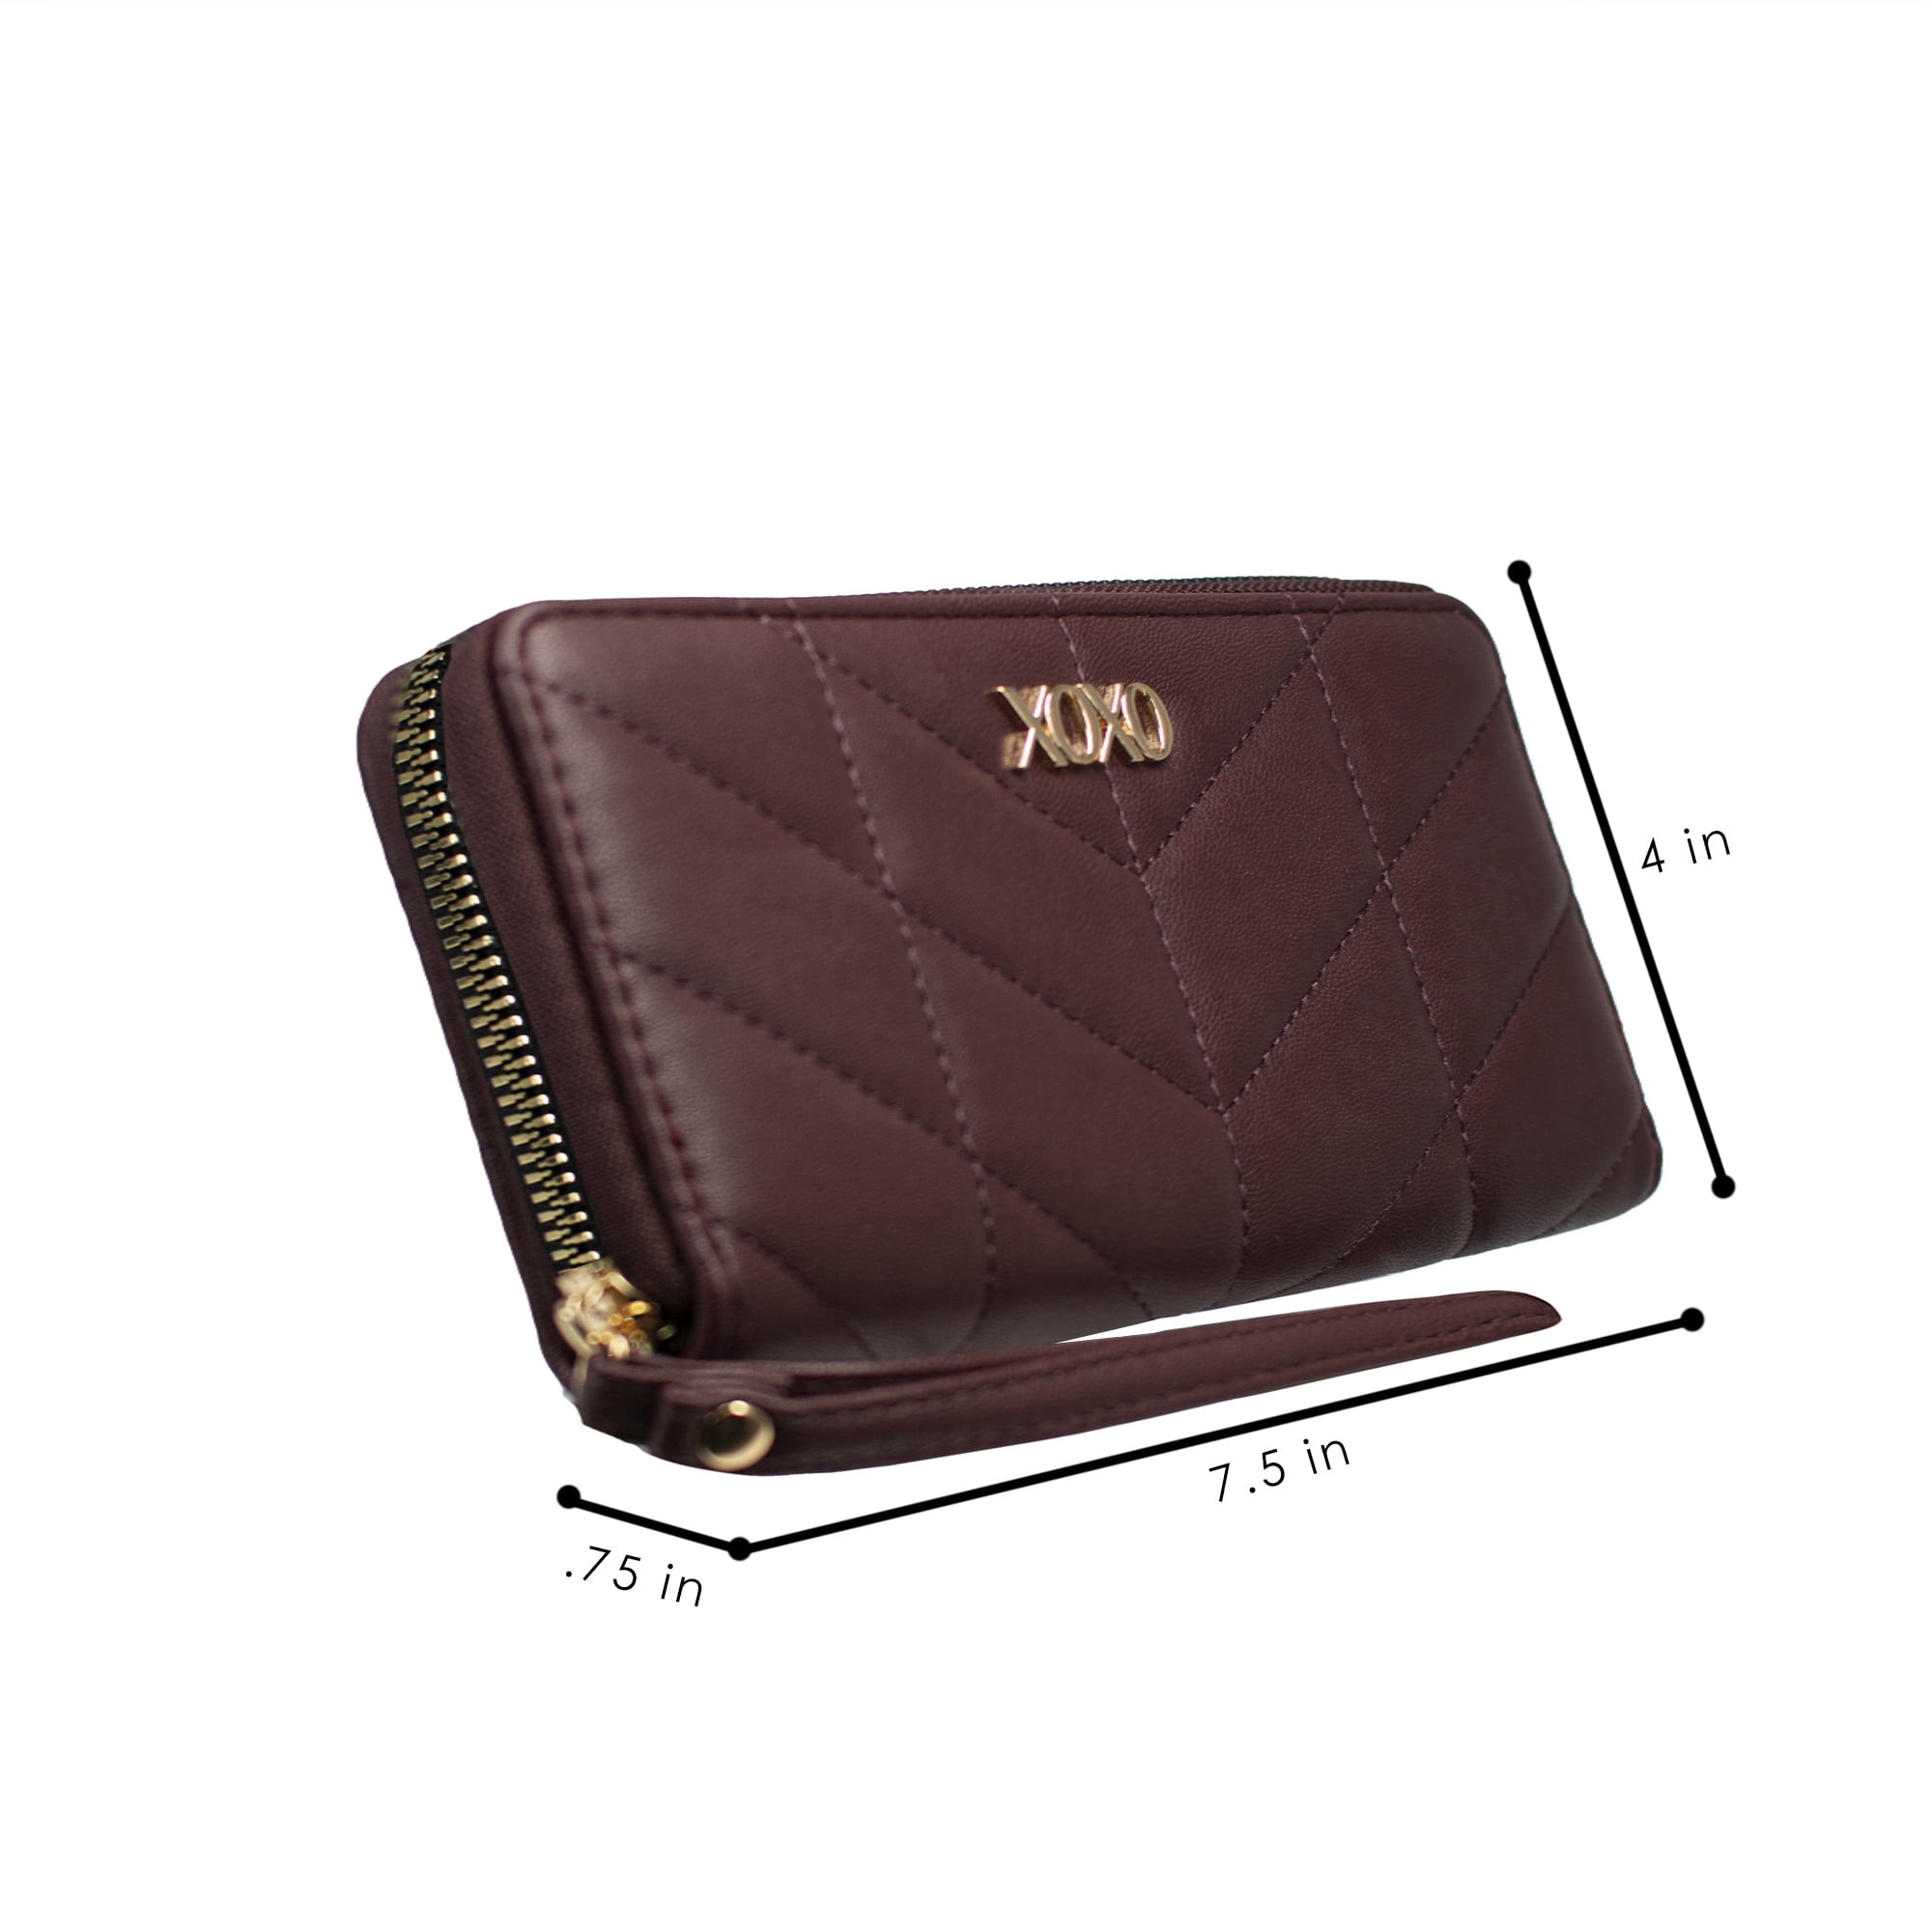 XOXO Women's Powder Blue Vegan Leather Quilted Single Zip Wallet 